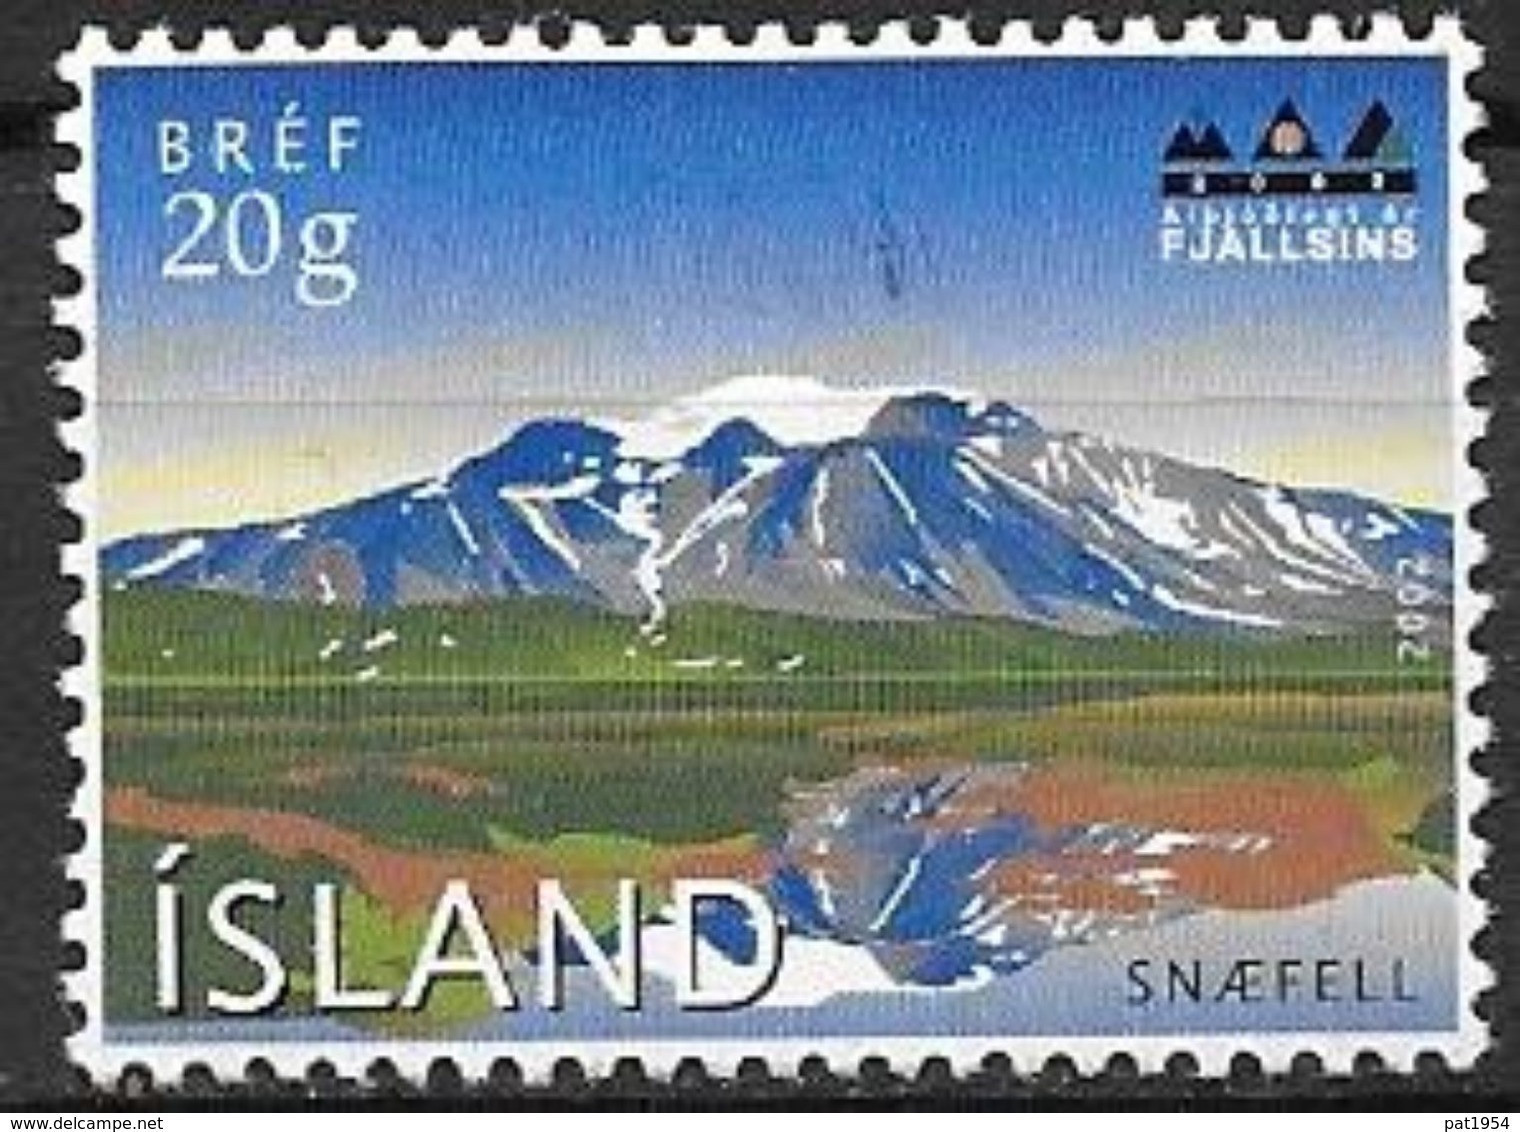 Islande 2002 N°932 Neuf** Année De La Montagne Snaefel - Unused Stamps